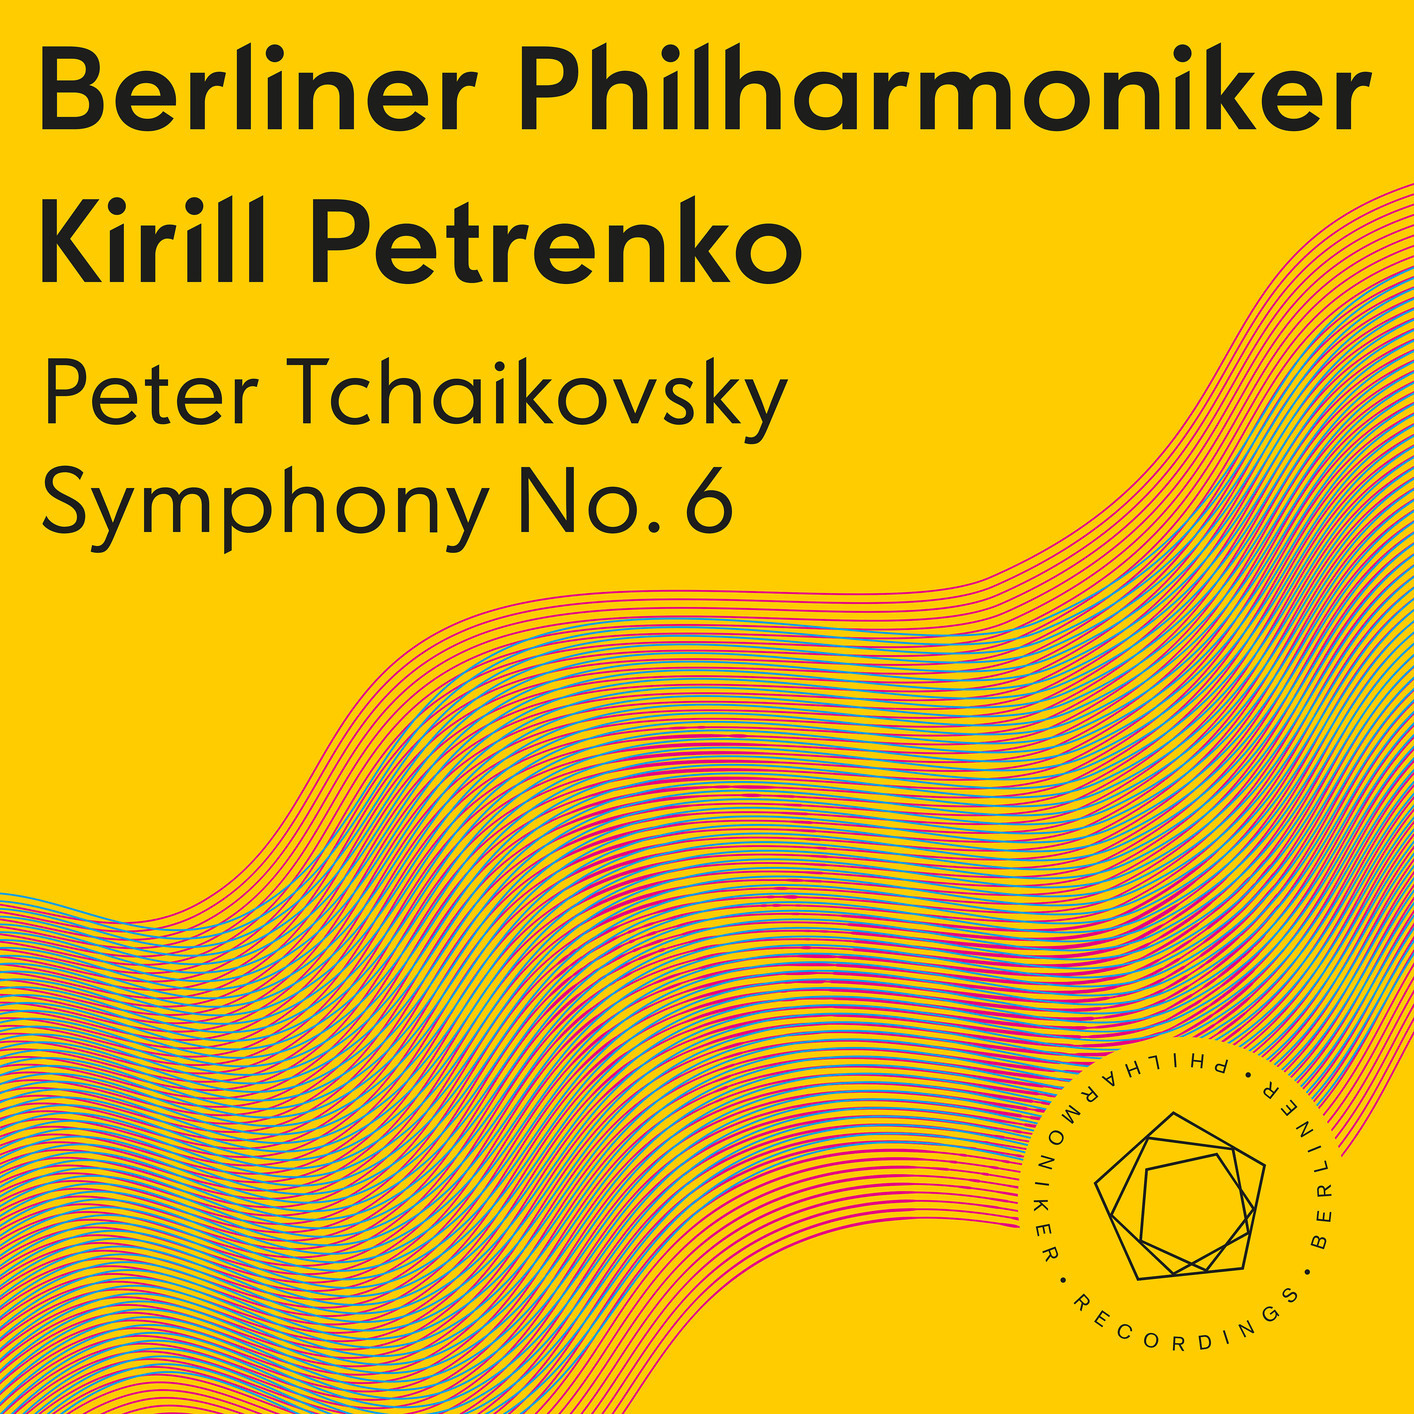 Berliner Philharmoniker & Kirill Petrenko - Tchaikovsky: Symphony No. 6 "Pathetique" (2019) [FLAC 24bit/96kHz]